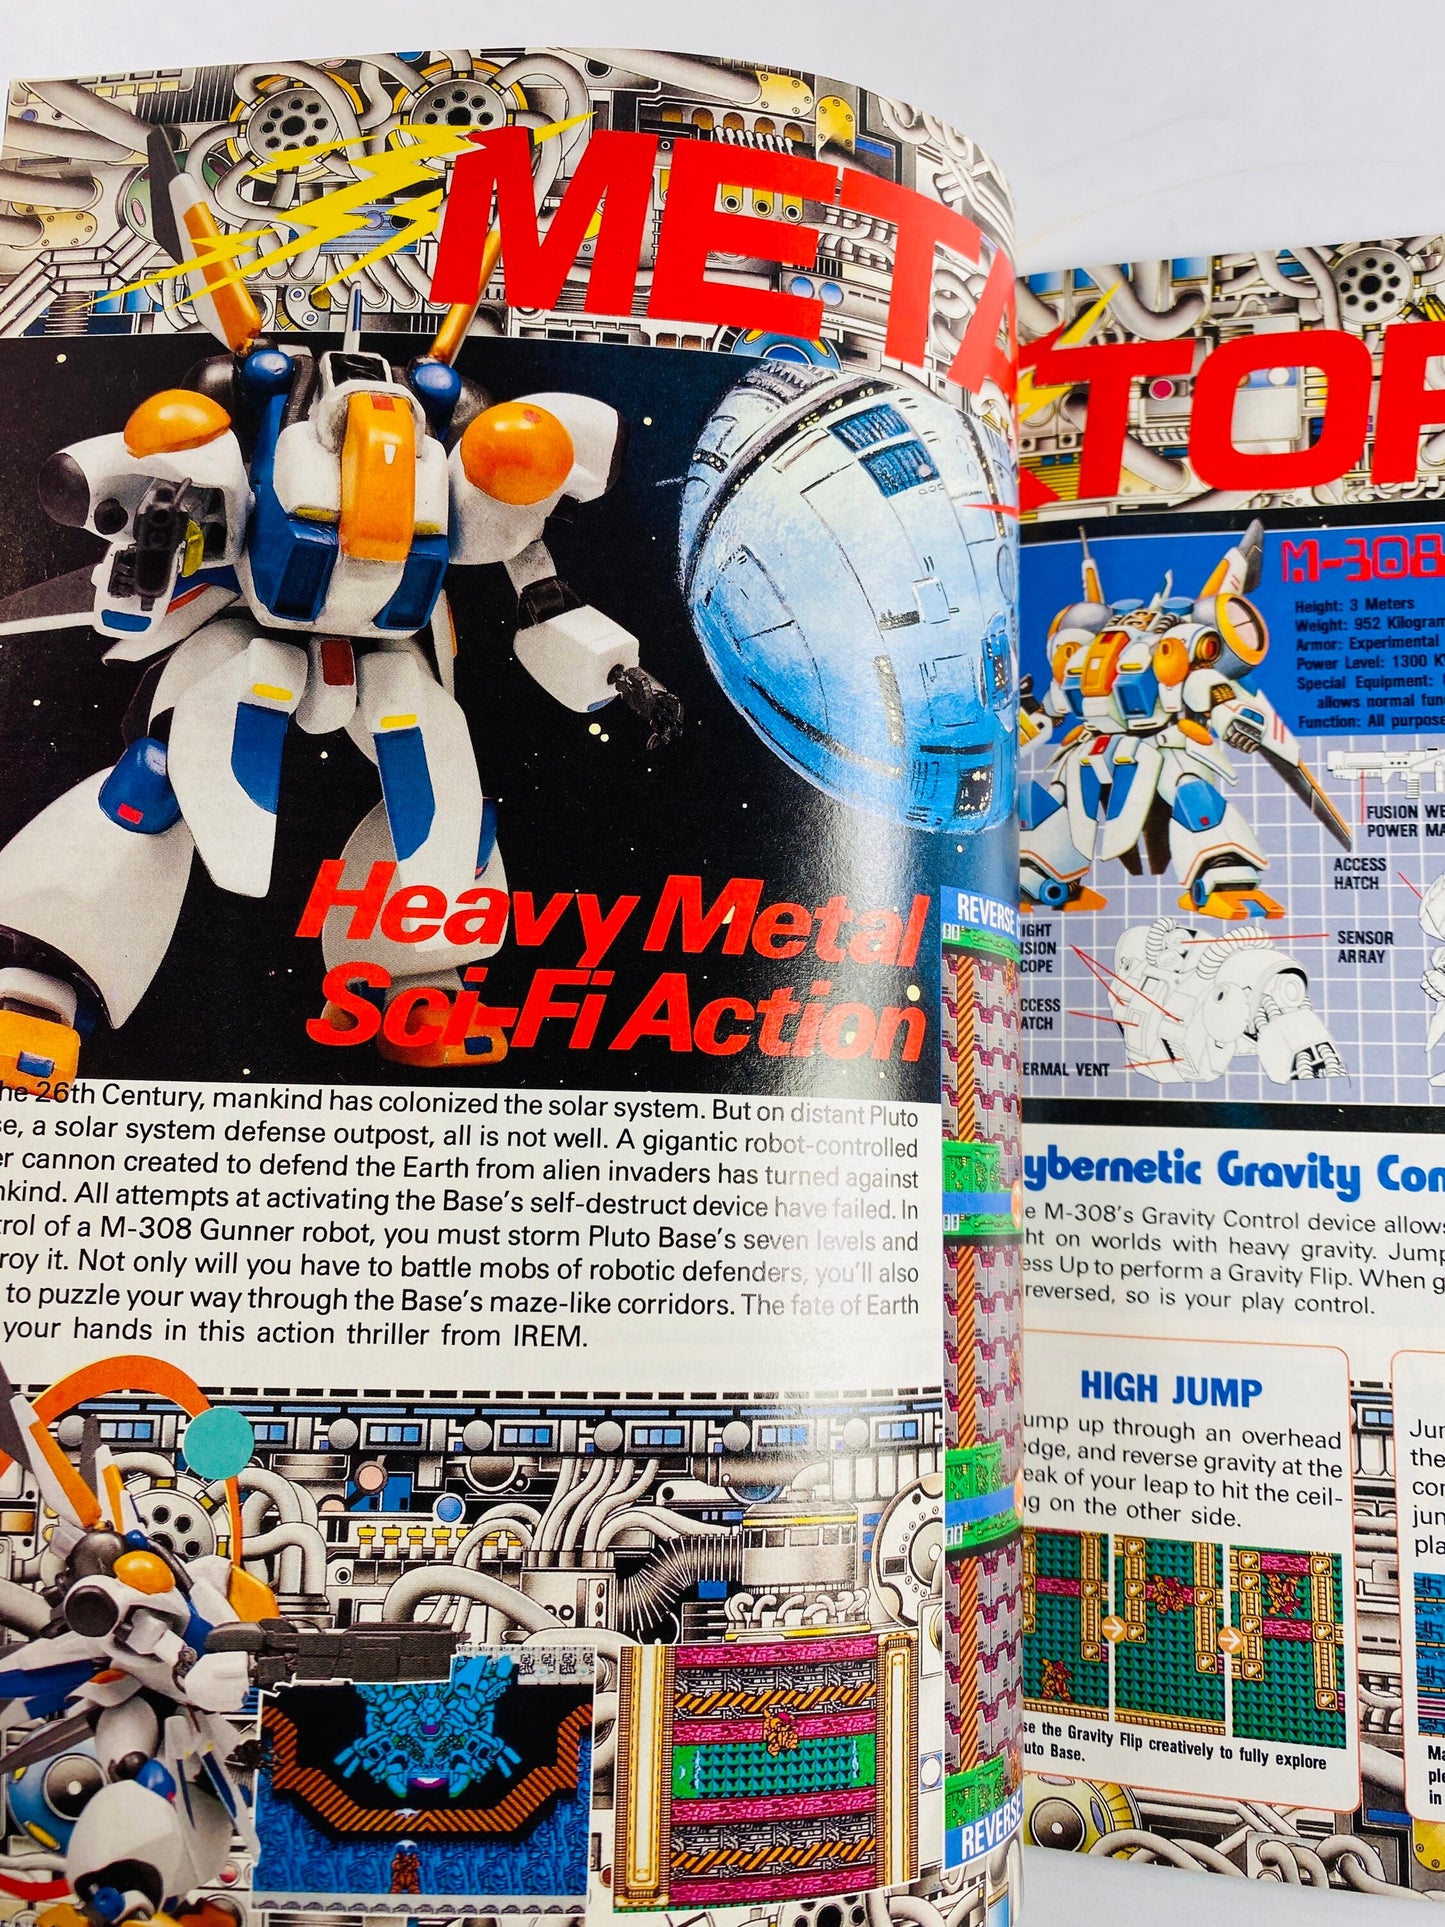 1990 Vintage Nintendo Power magazine featuring video game & Gameboy strategies